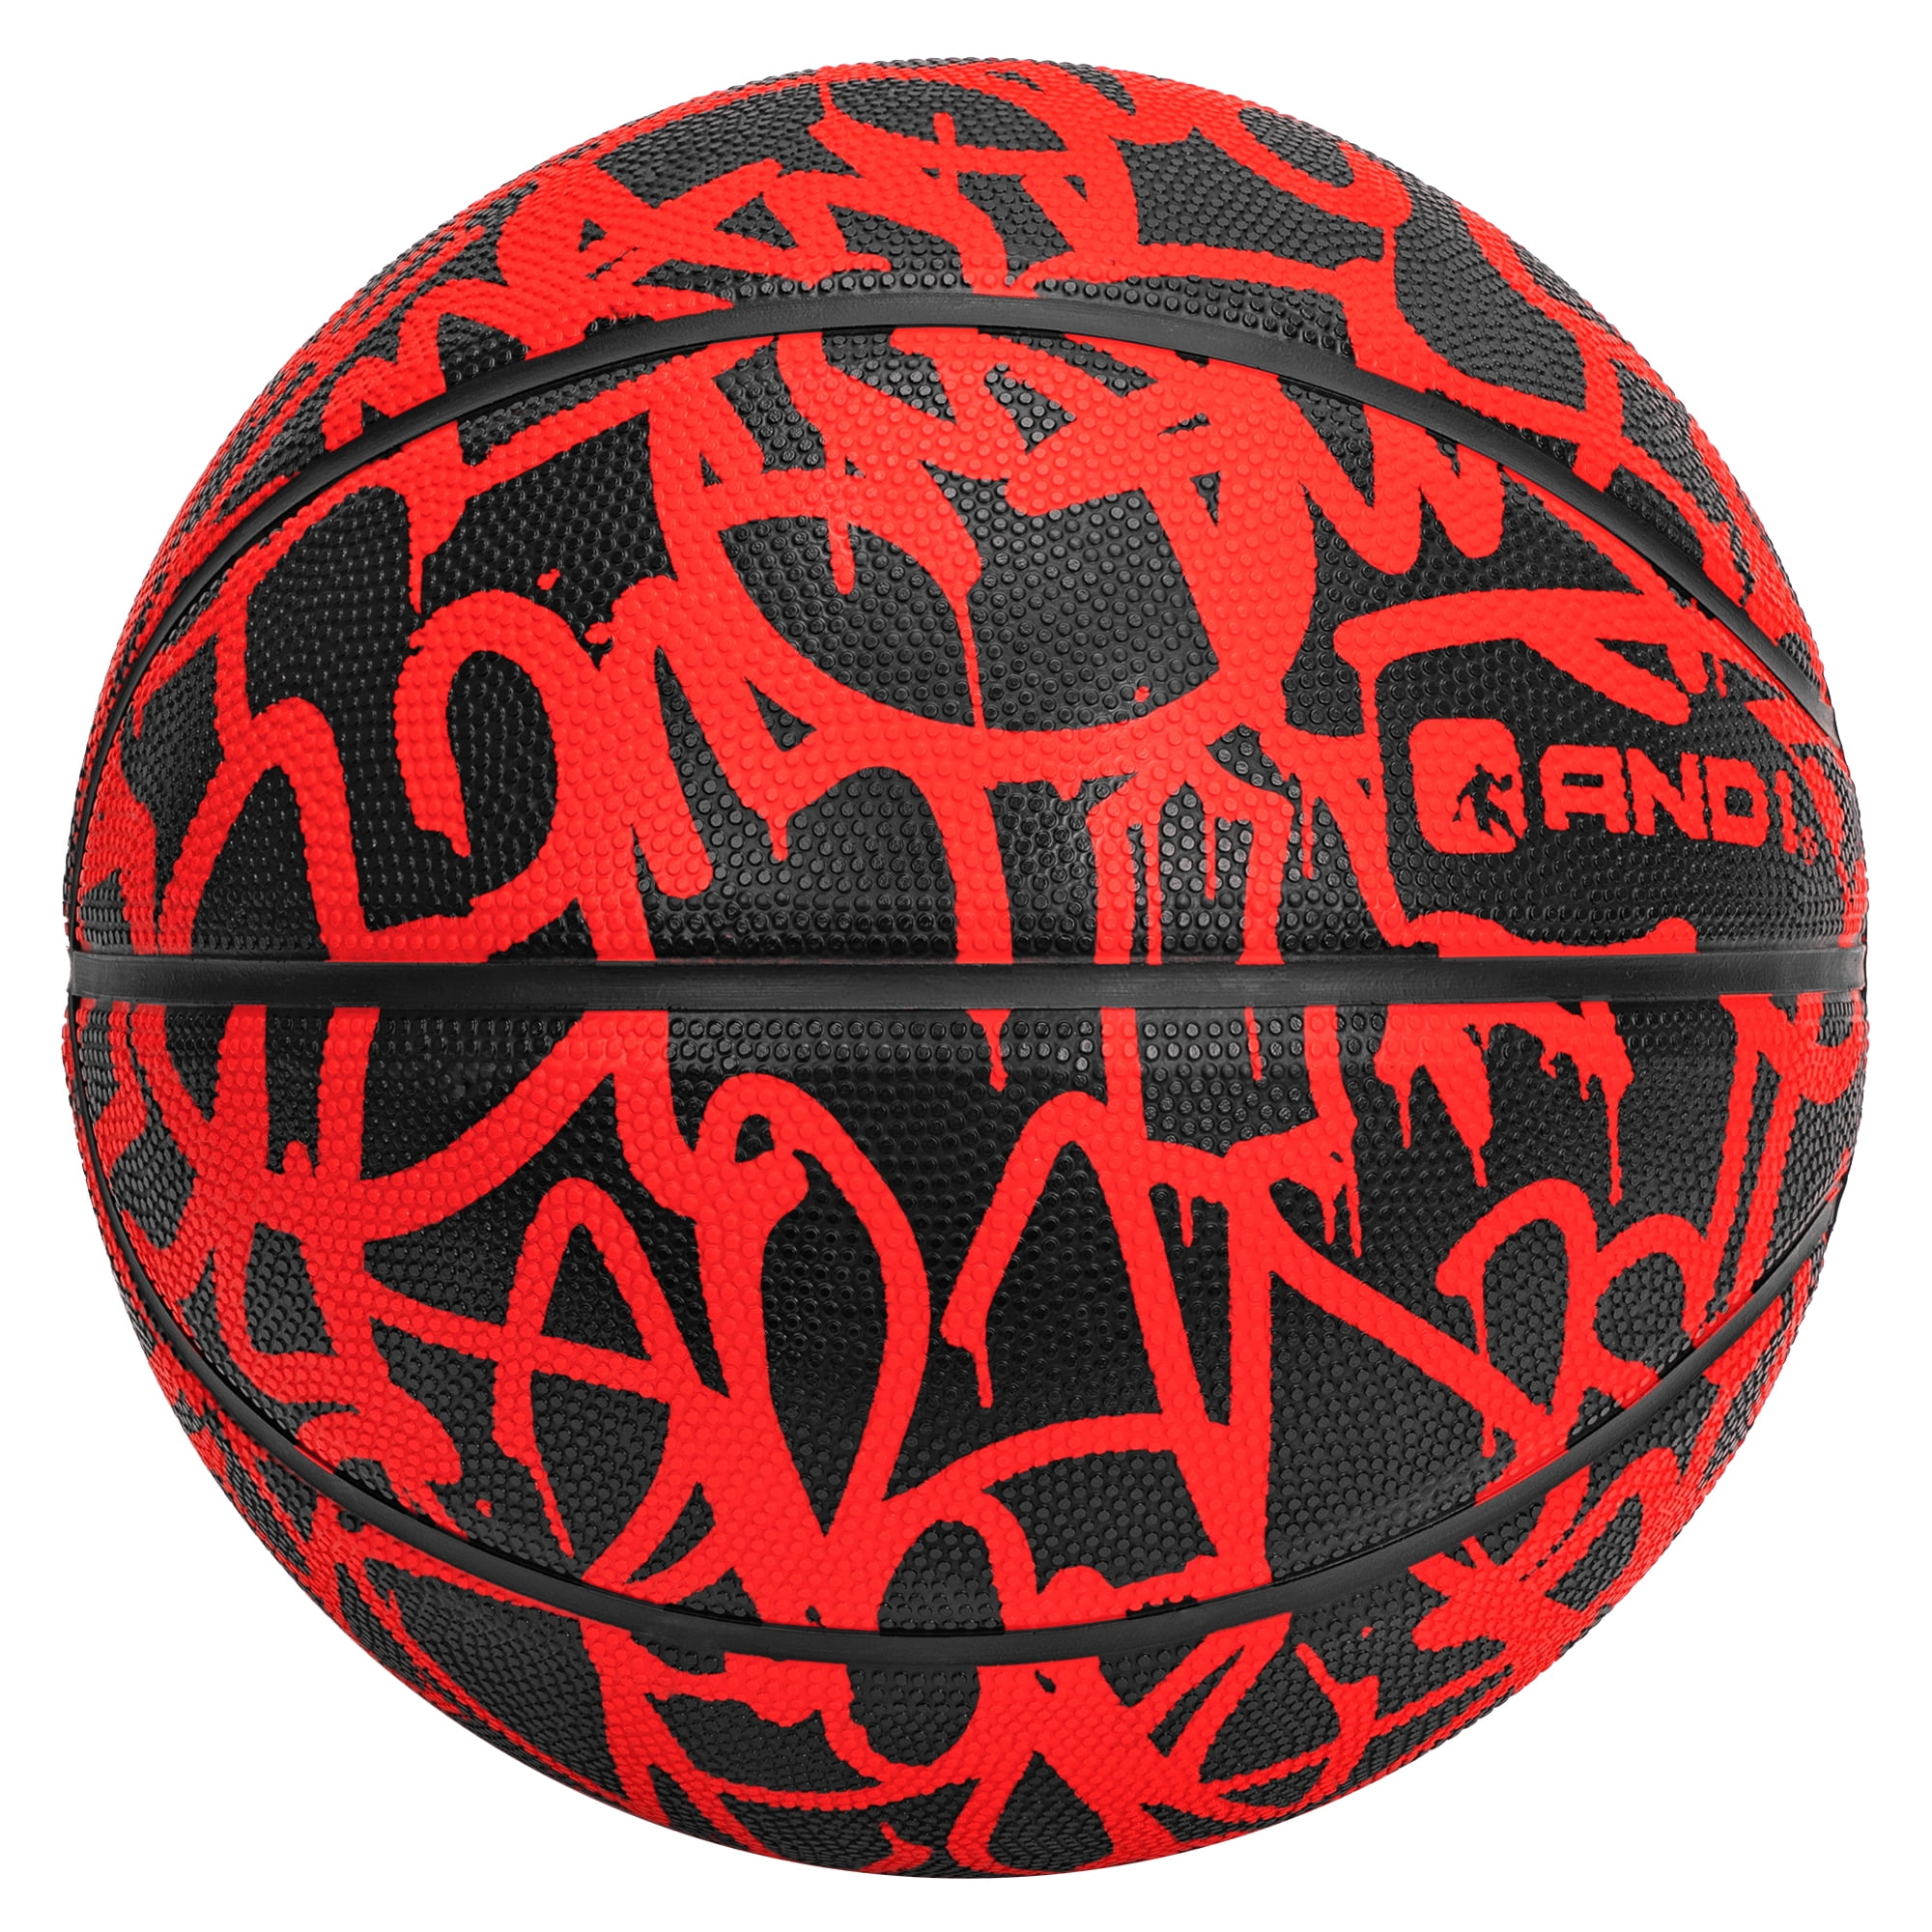 AND1 Fantom Graffiti Street Basketball